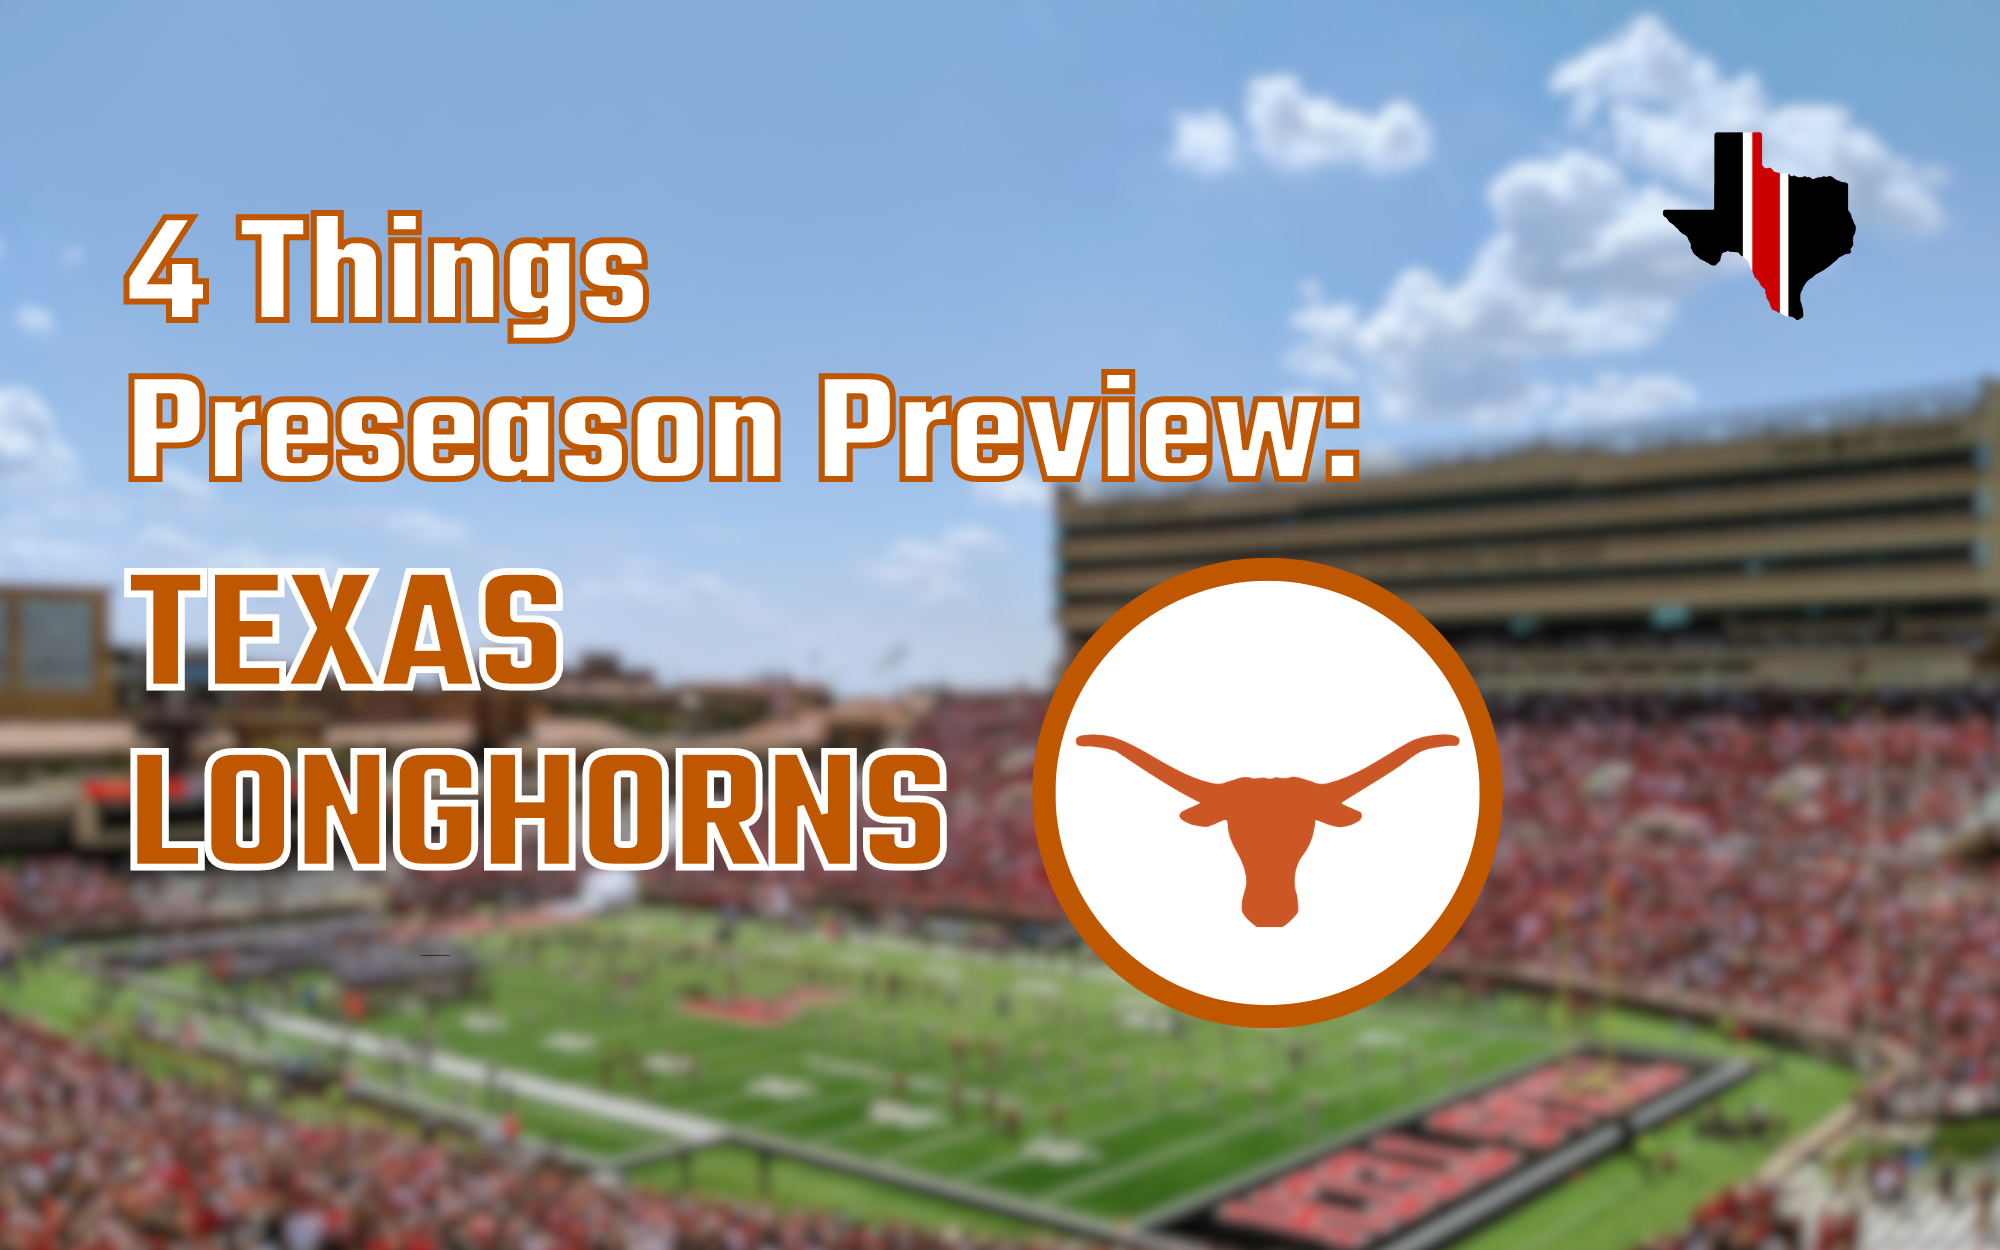 4 Things Preseason Preview: Texas Longhorns